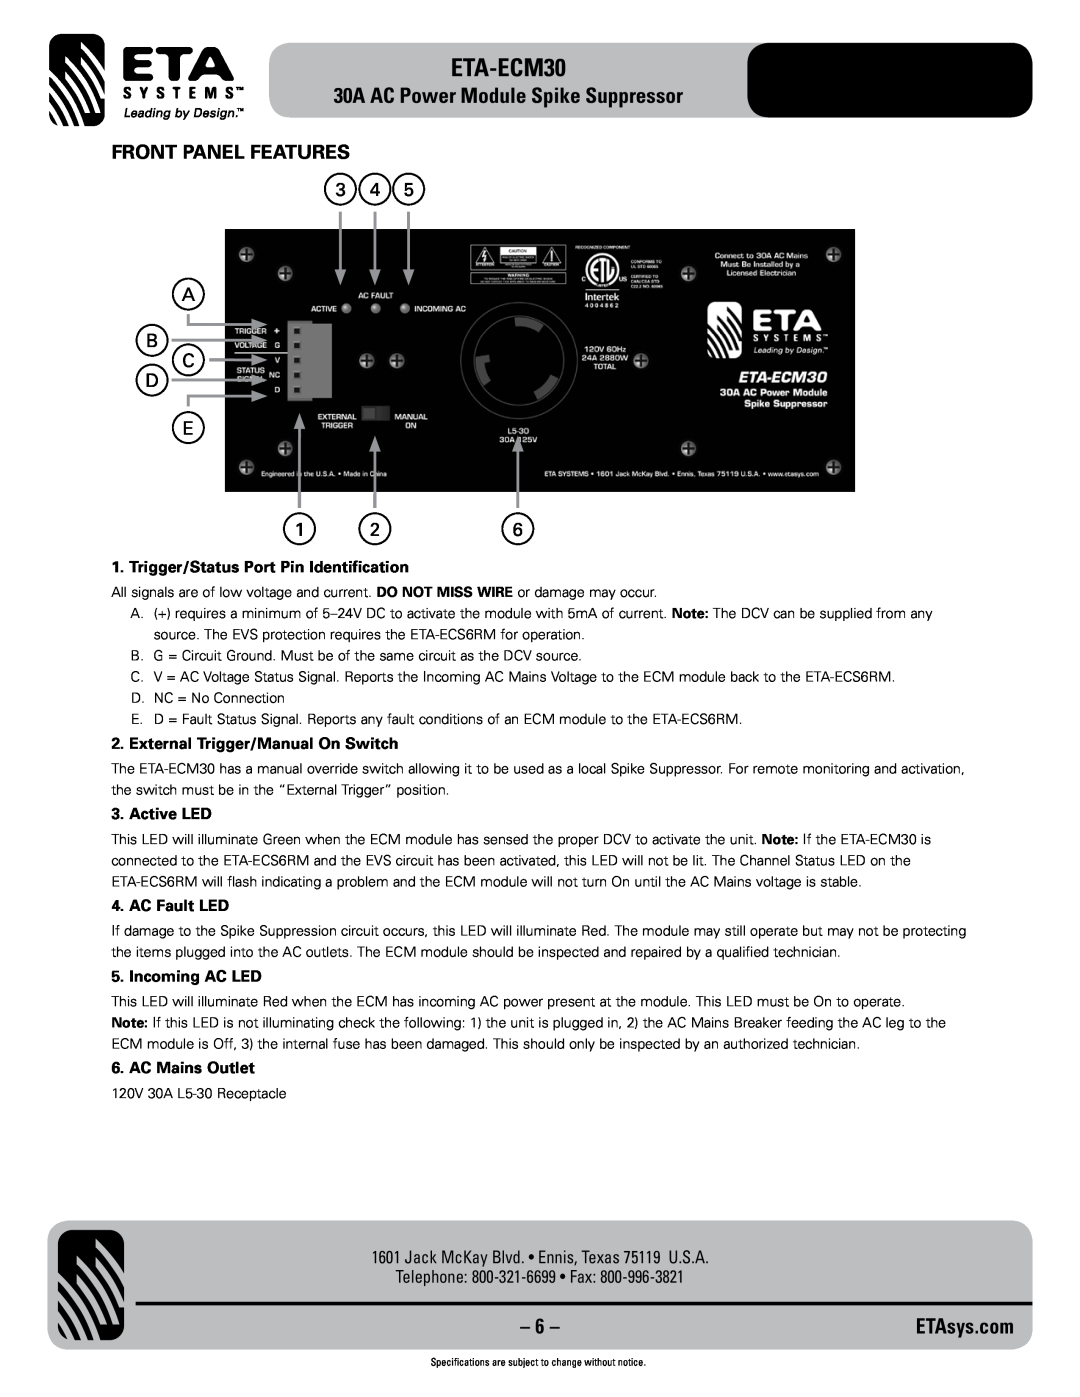 ETA Systems ETA-ECM30 Front Panel Features, Trigger/Status Port Pin Identification, External Trigger/Manual On Switch 